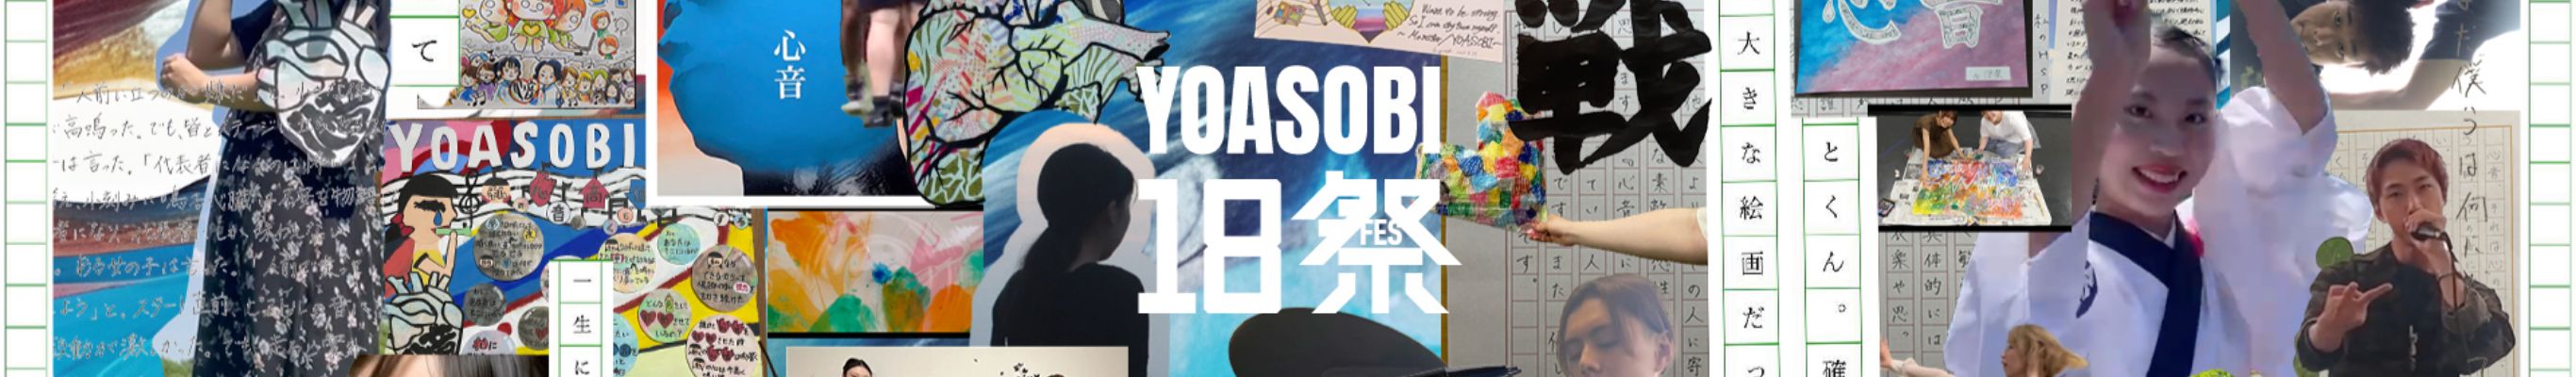 YOASOBI 18祭